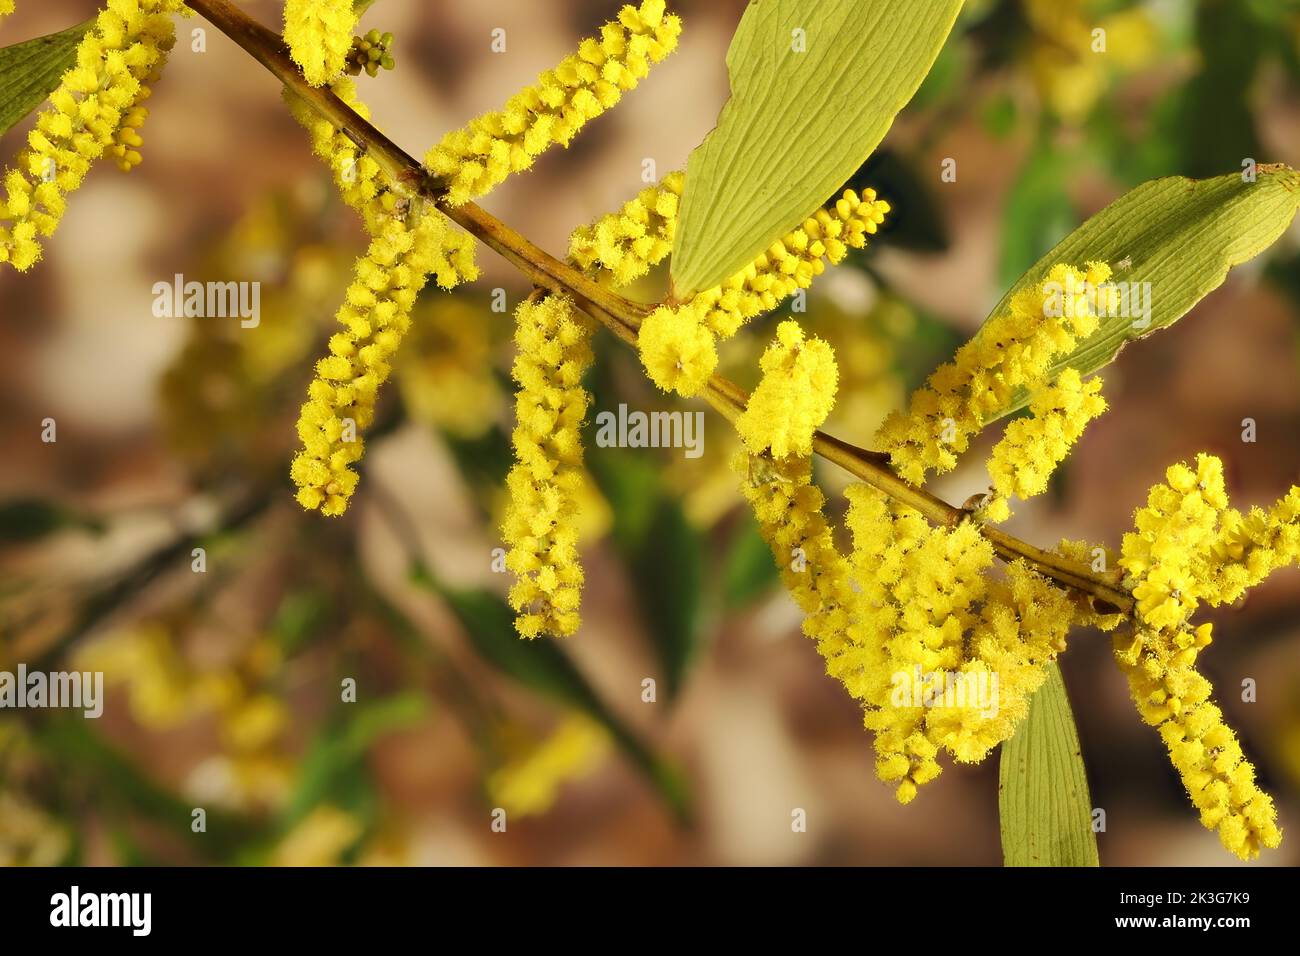 Coastal Wattle (Acacia longifolia subsp. sophorae) in flower. Australian native plant. Stock Photo